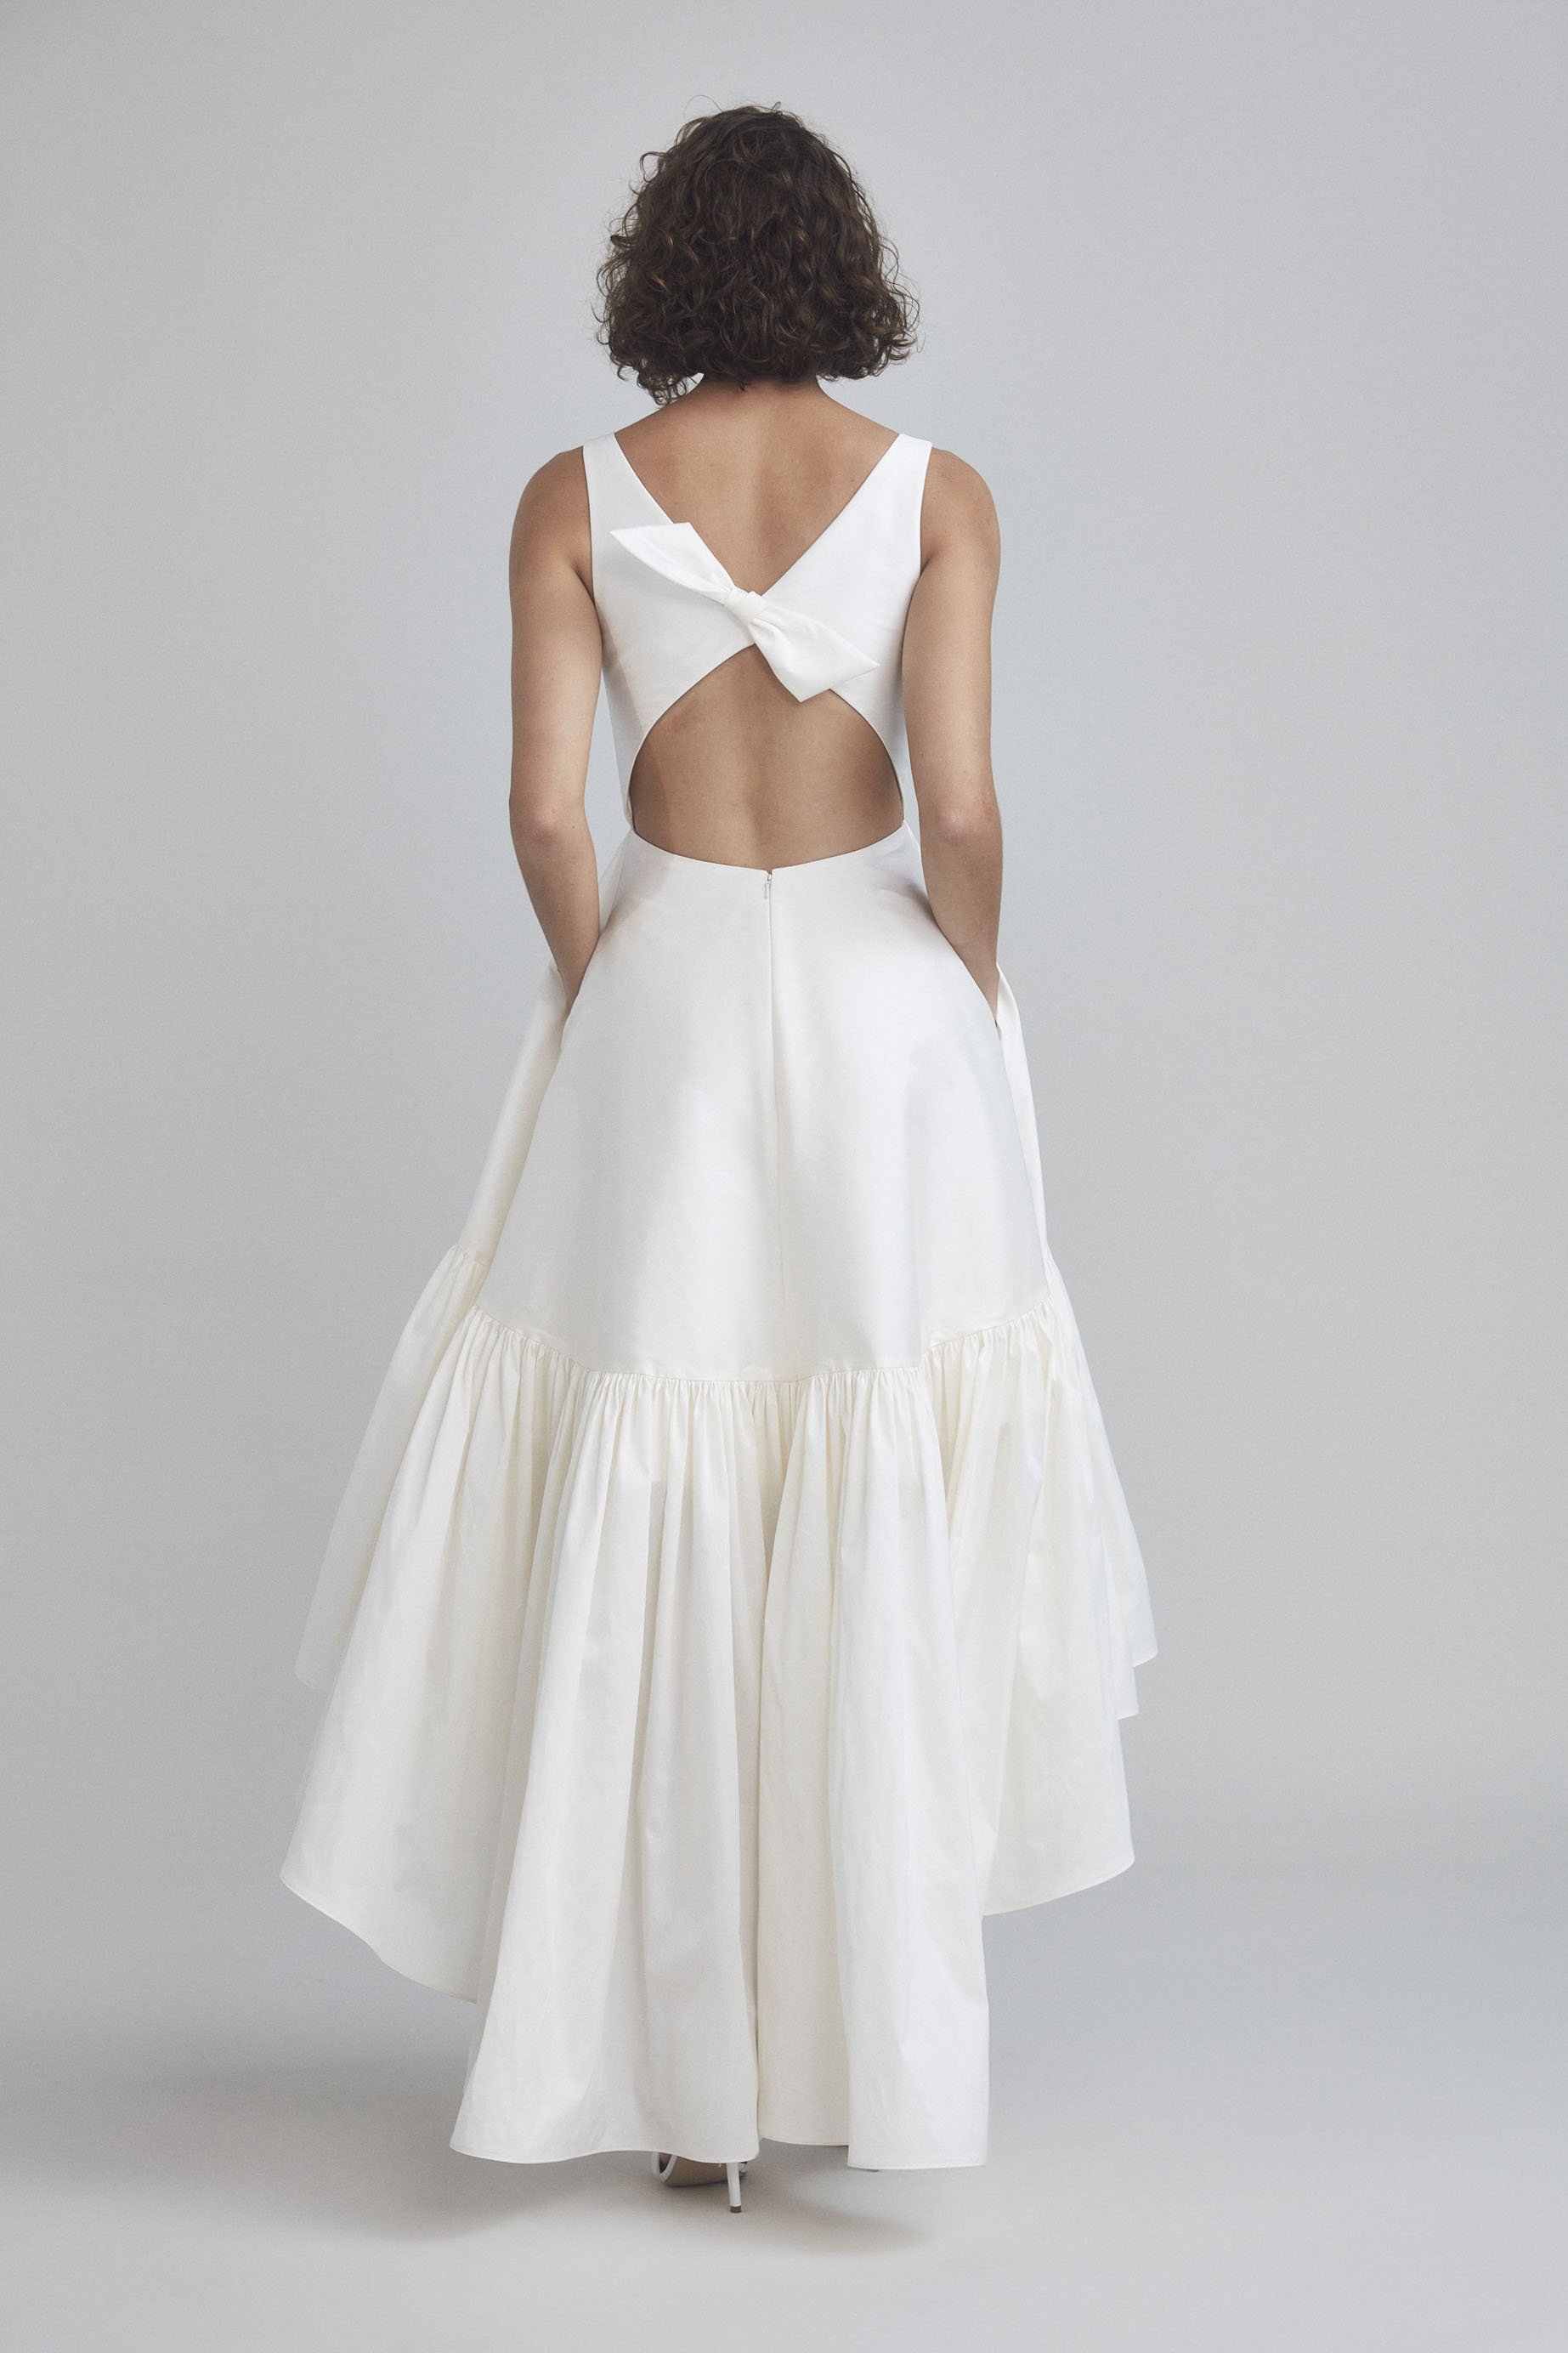 Amsale + Little White Dress + LW188 + Taffeta + Scoop Neck + High-low Hem + A-line + Bow + Pockets + Back.jpg